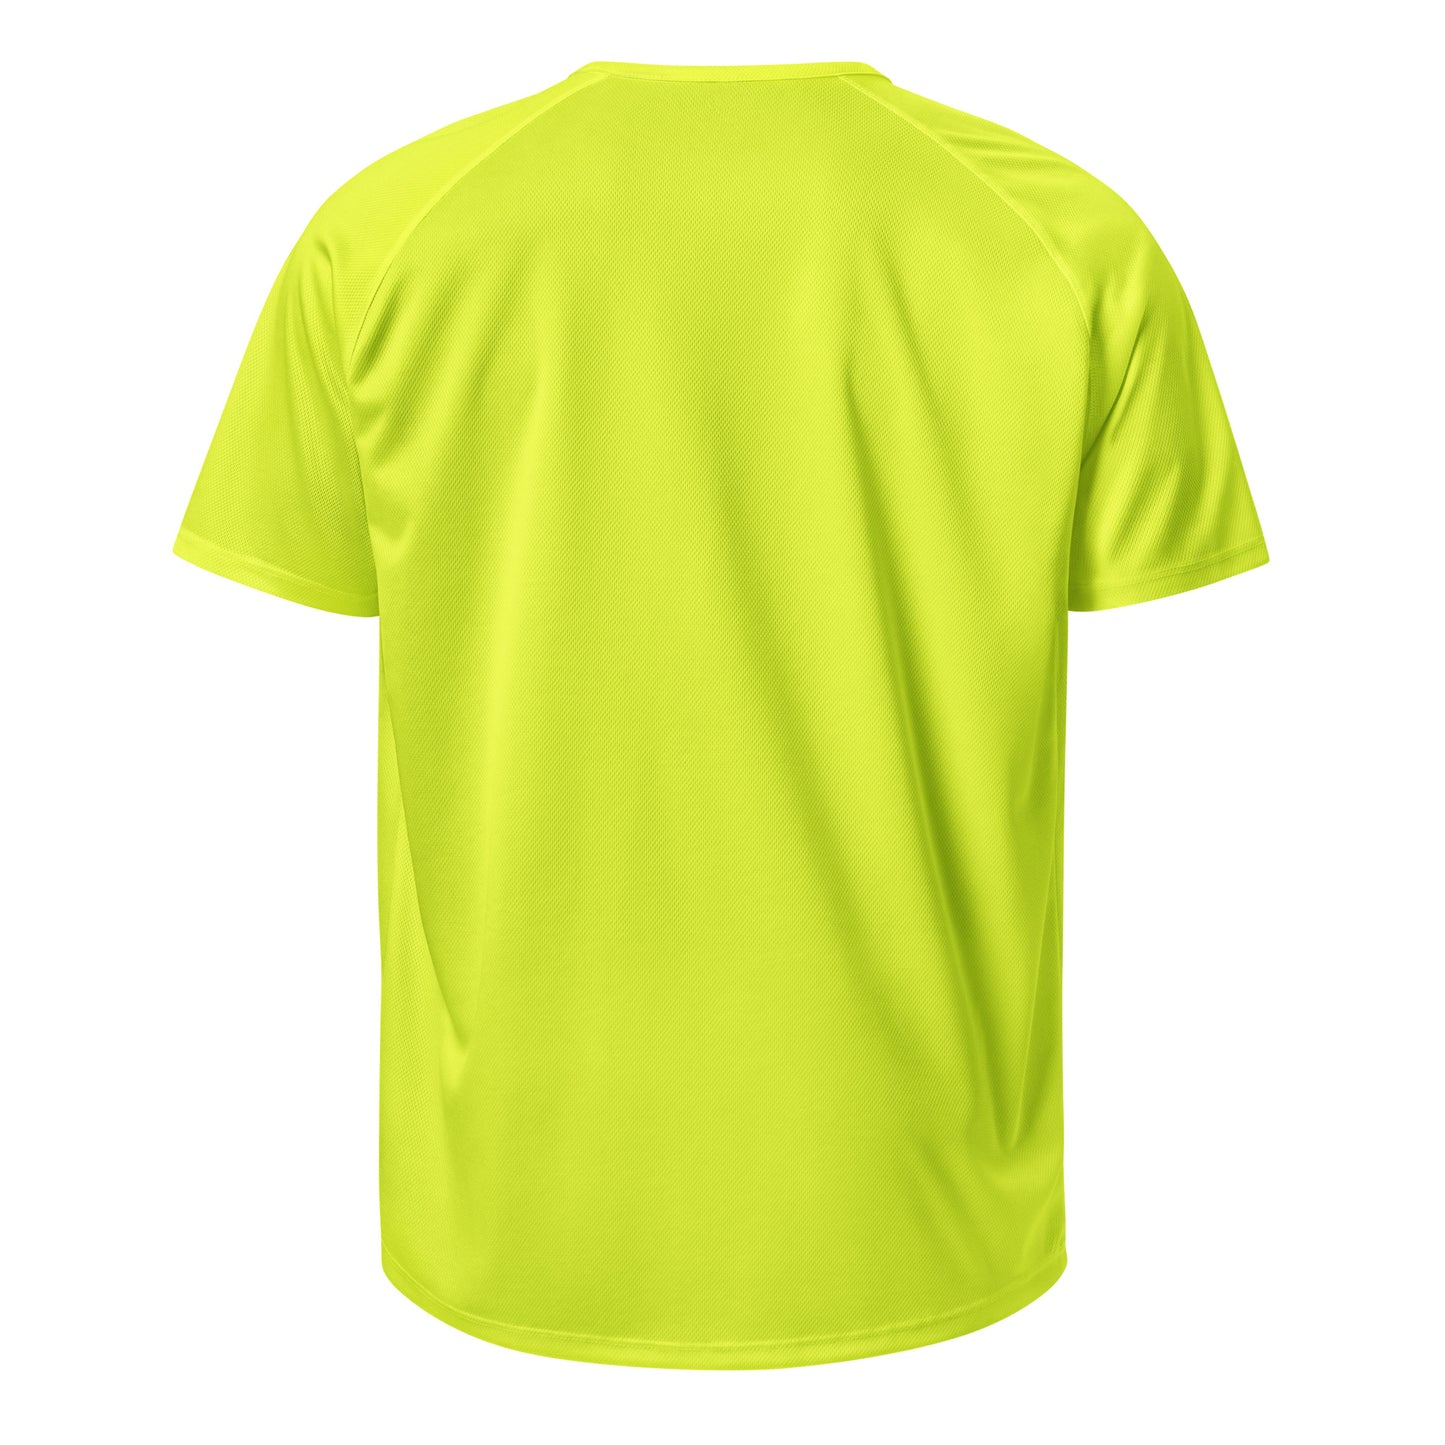 E121 - Sports/Breathable Fabric (Universal jump/woman : Yellow)